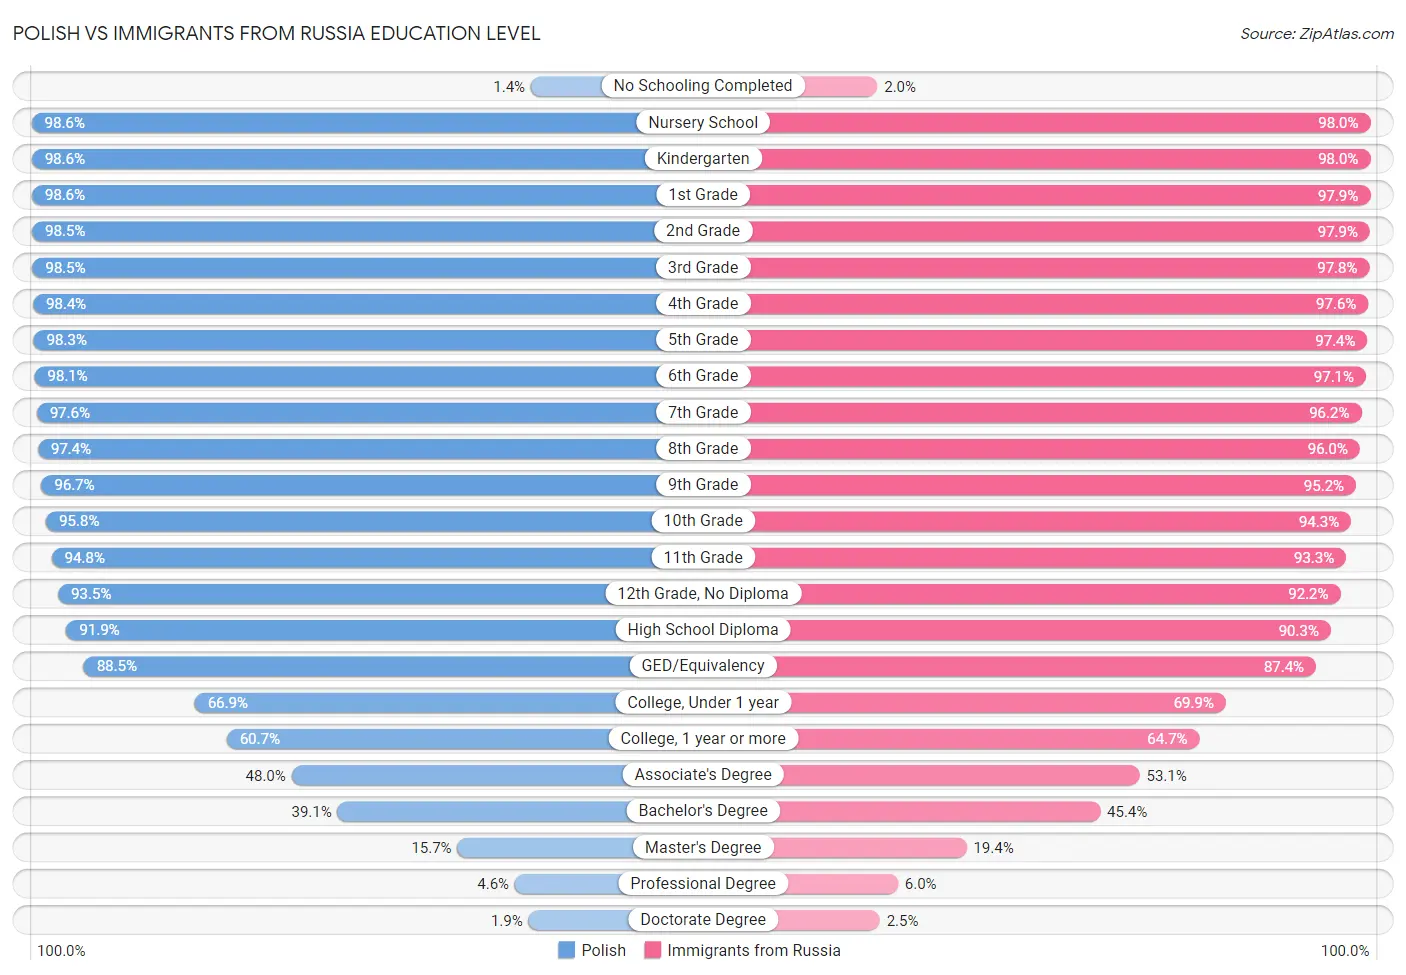 Polish vs Immigrants from Russia Education Level